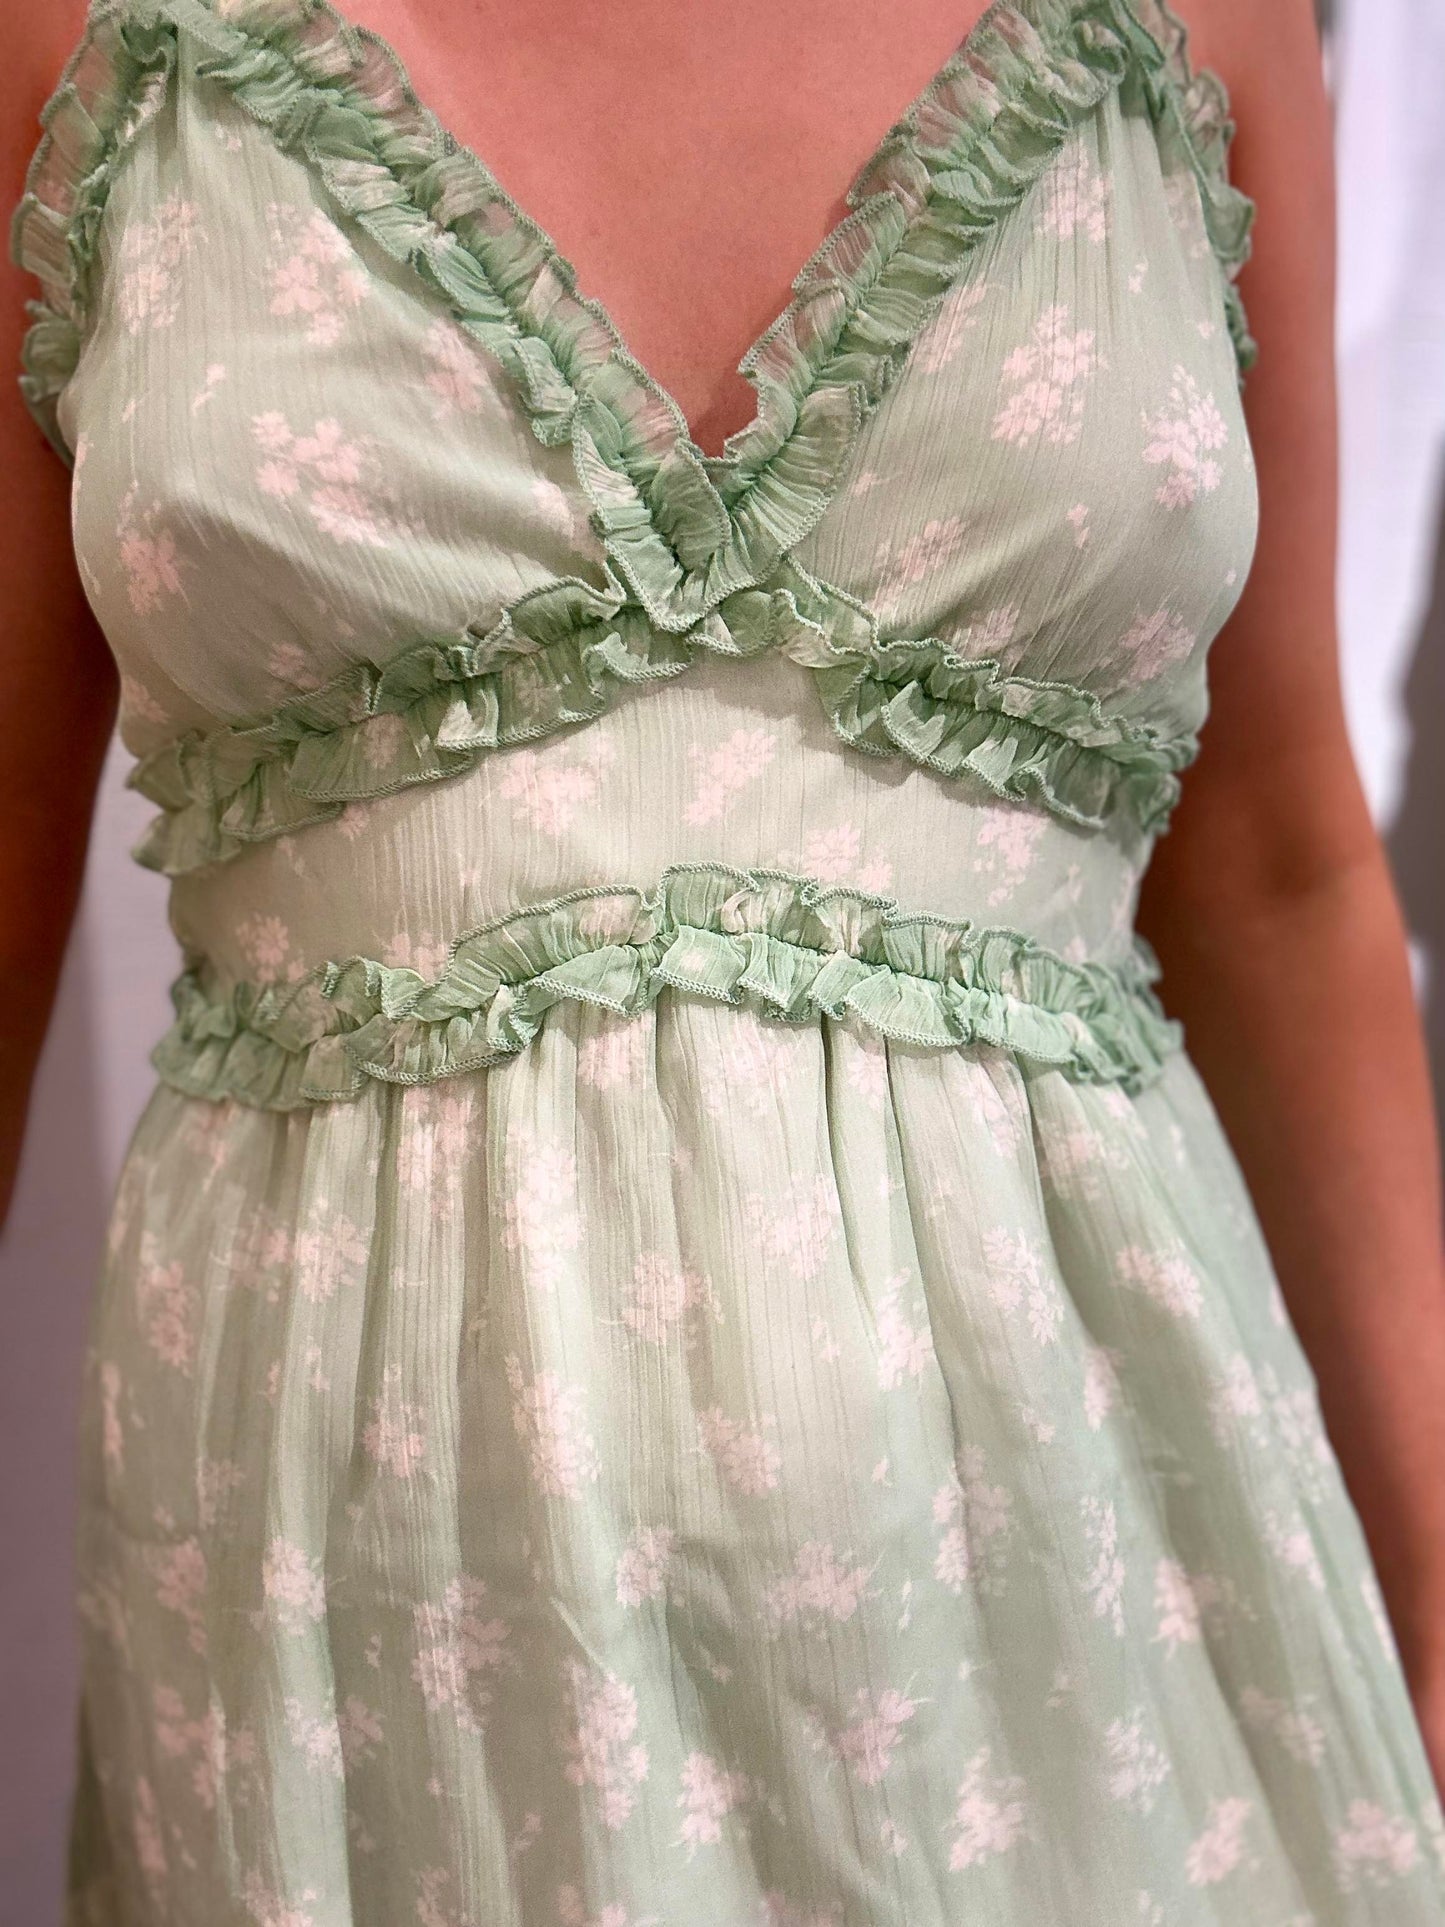 VMSMILLA Dress - Cameo Green